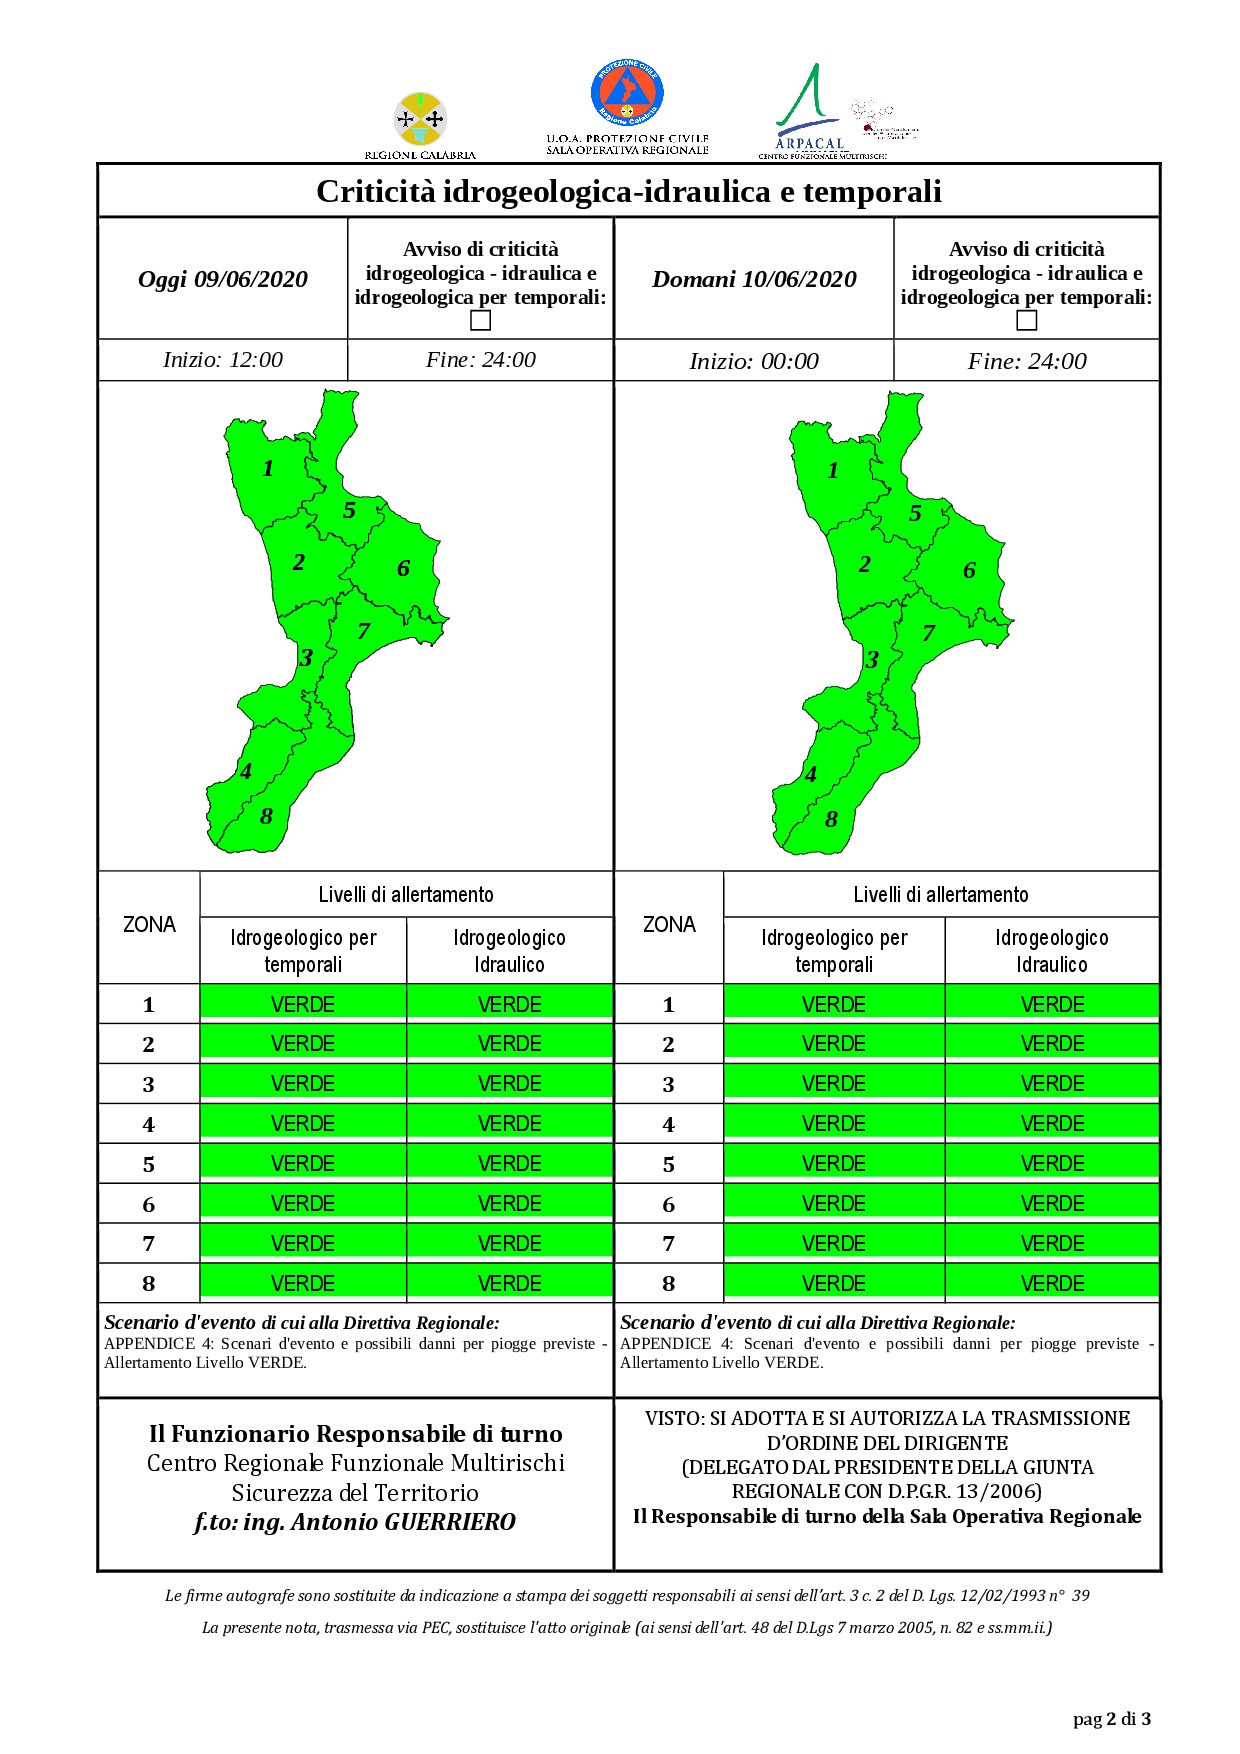 Criticità idrogeologica-idraulica e temporali in Calabria 09-06-2020